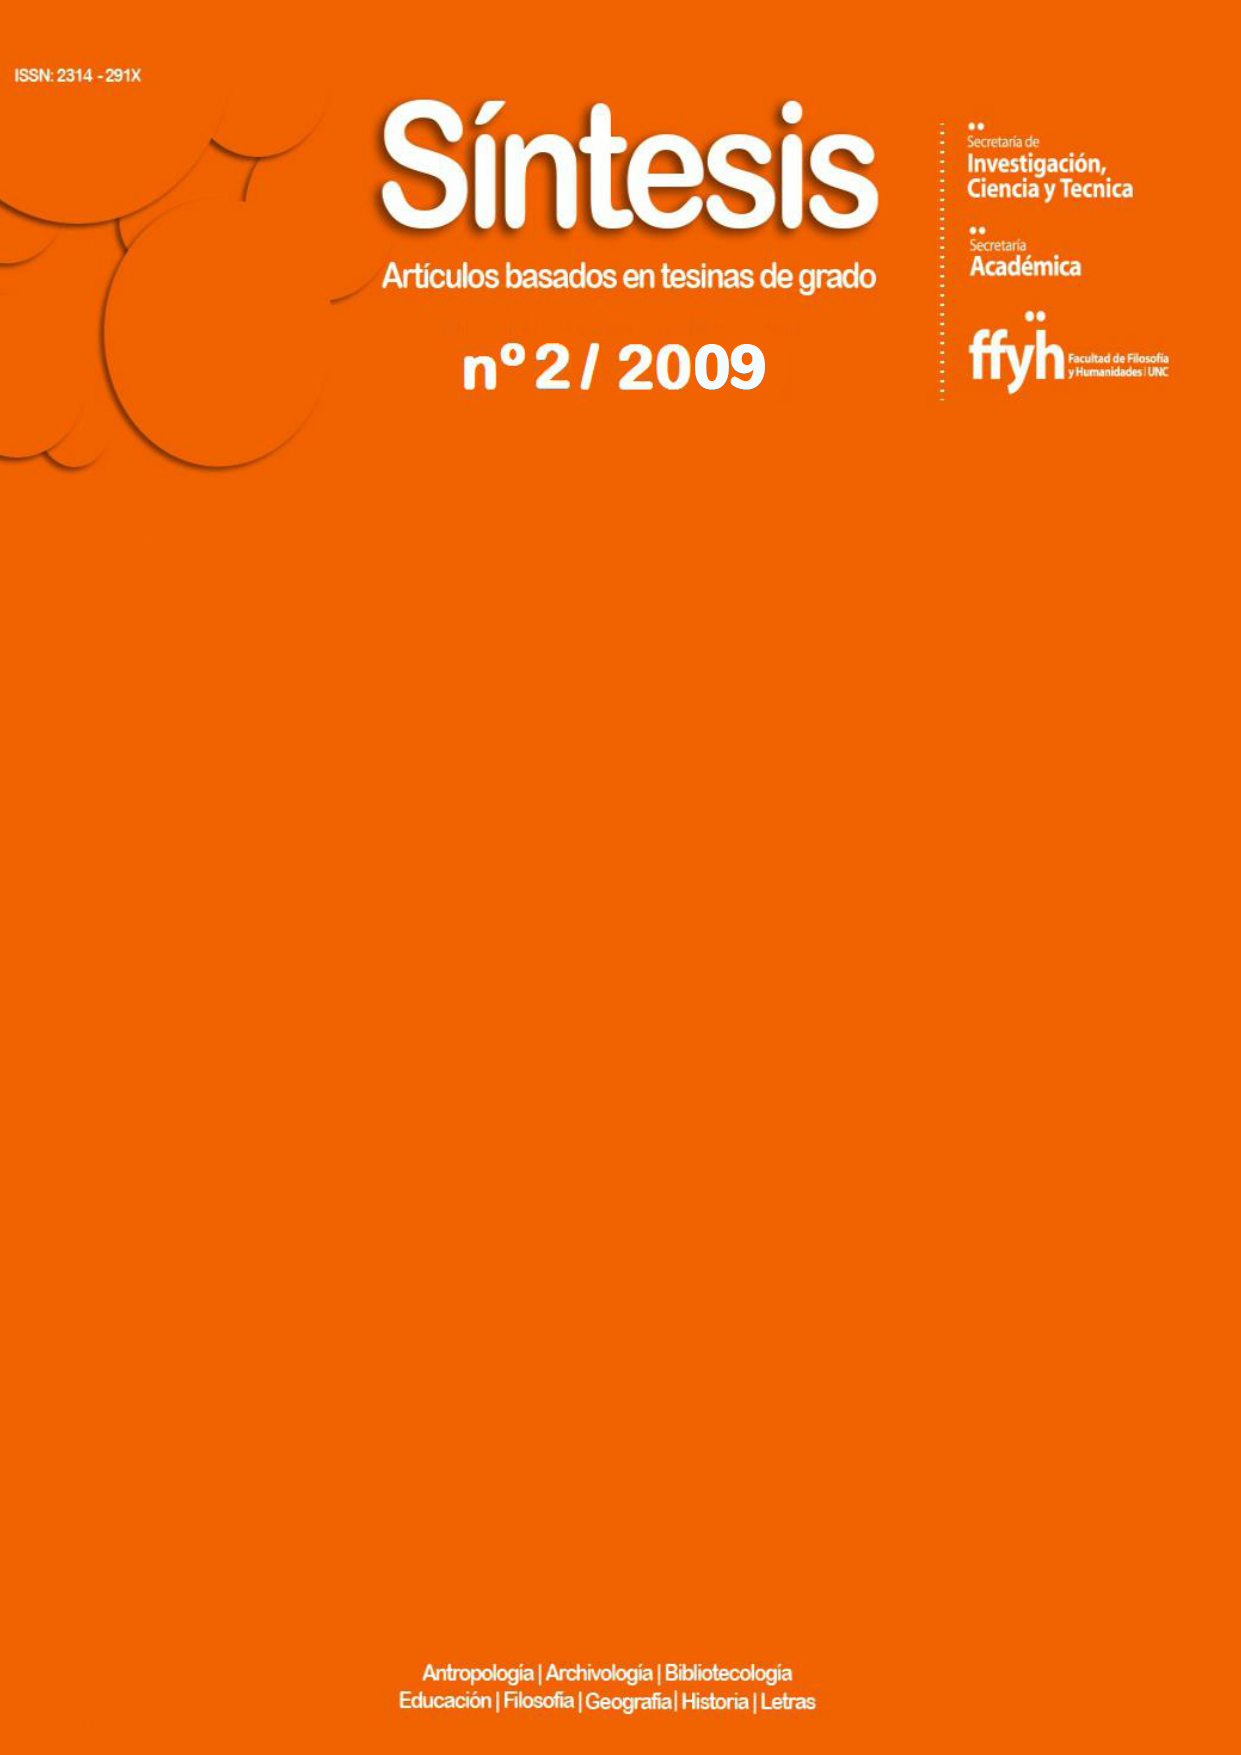 					Visualizar n. 2 (2009): Revista Síntesis
				